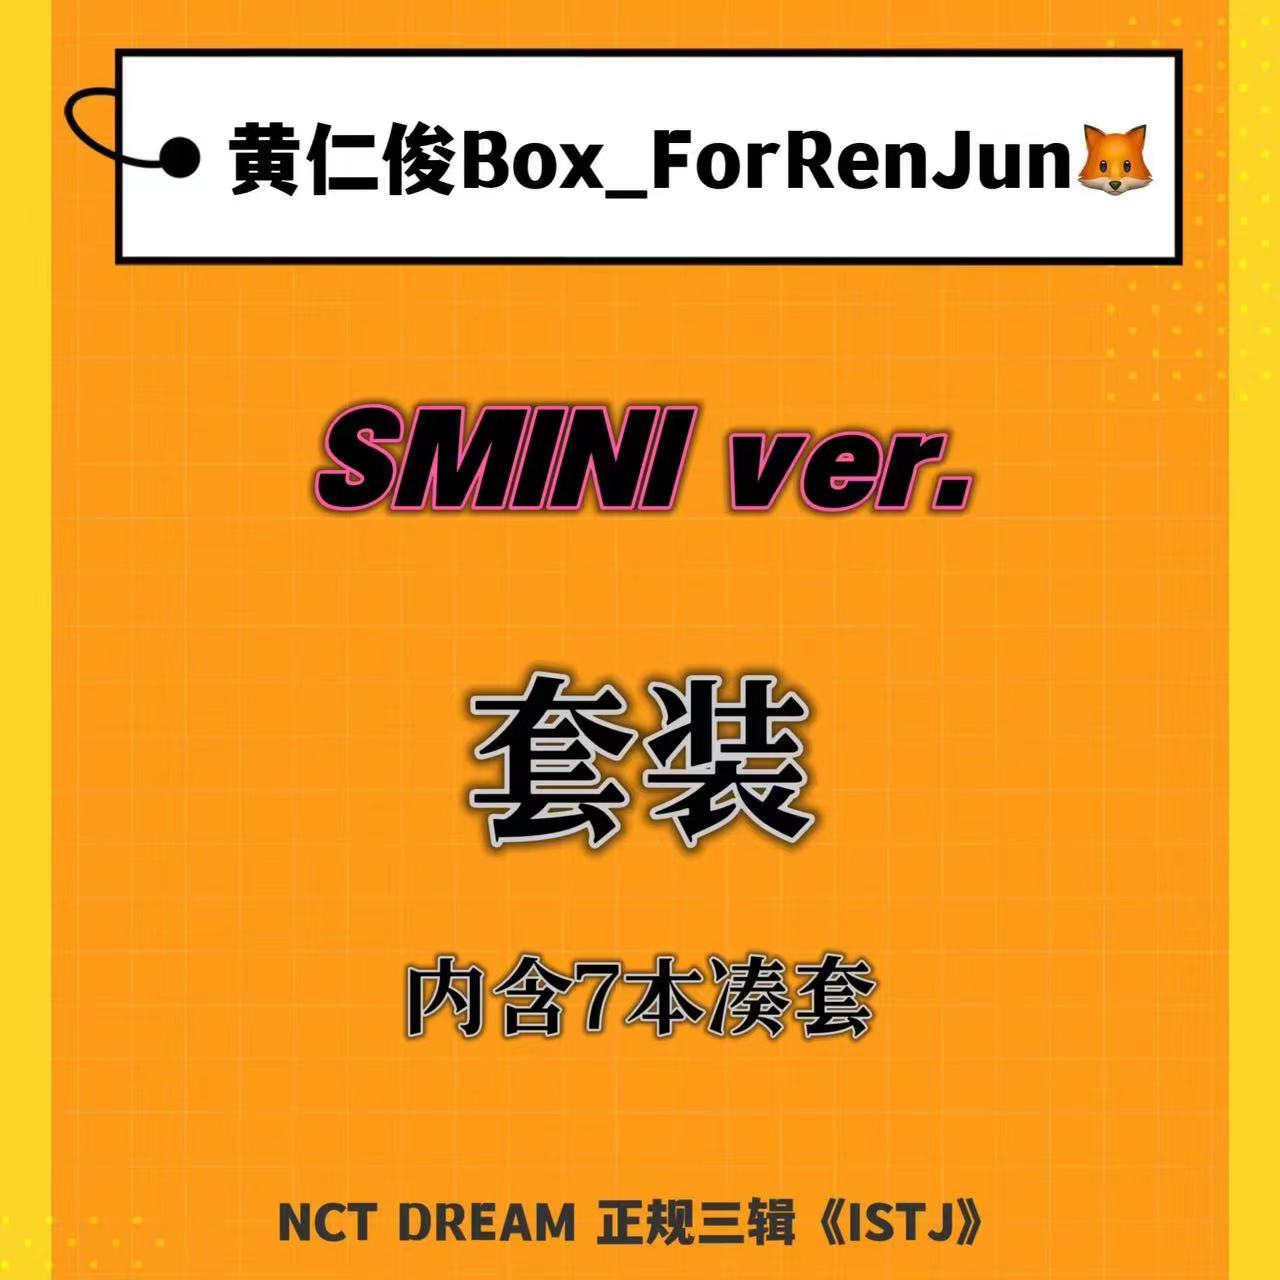 [全款 裸专] [7CD 套装] NCT DREAM - 正规3辑 [ISTJ] (SMini Ver.) (Smart Album)_黄仁俊吧RenJunBar